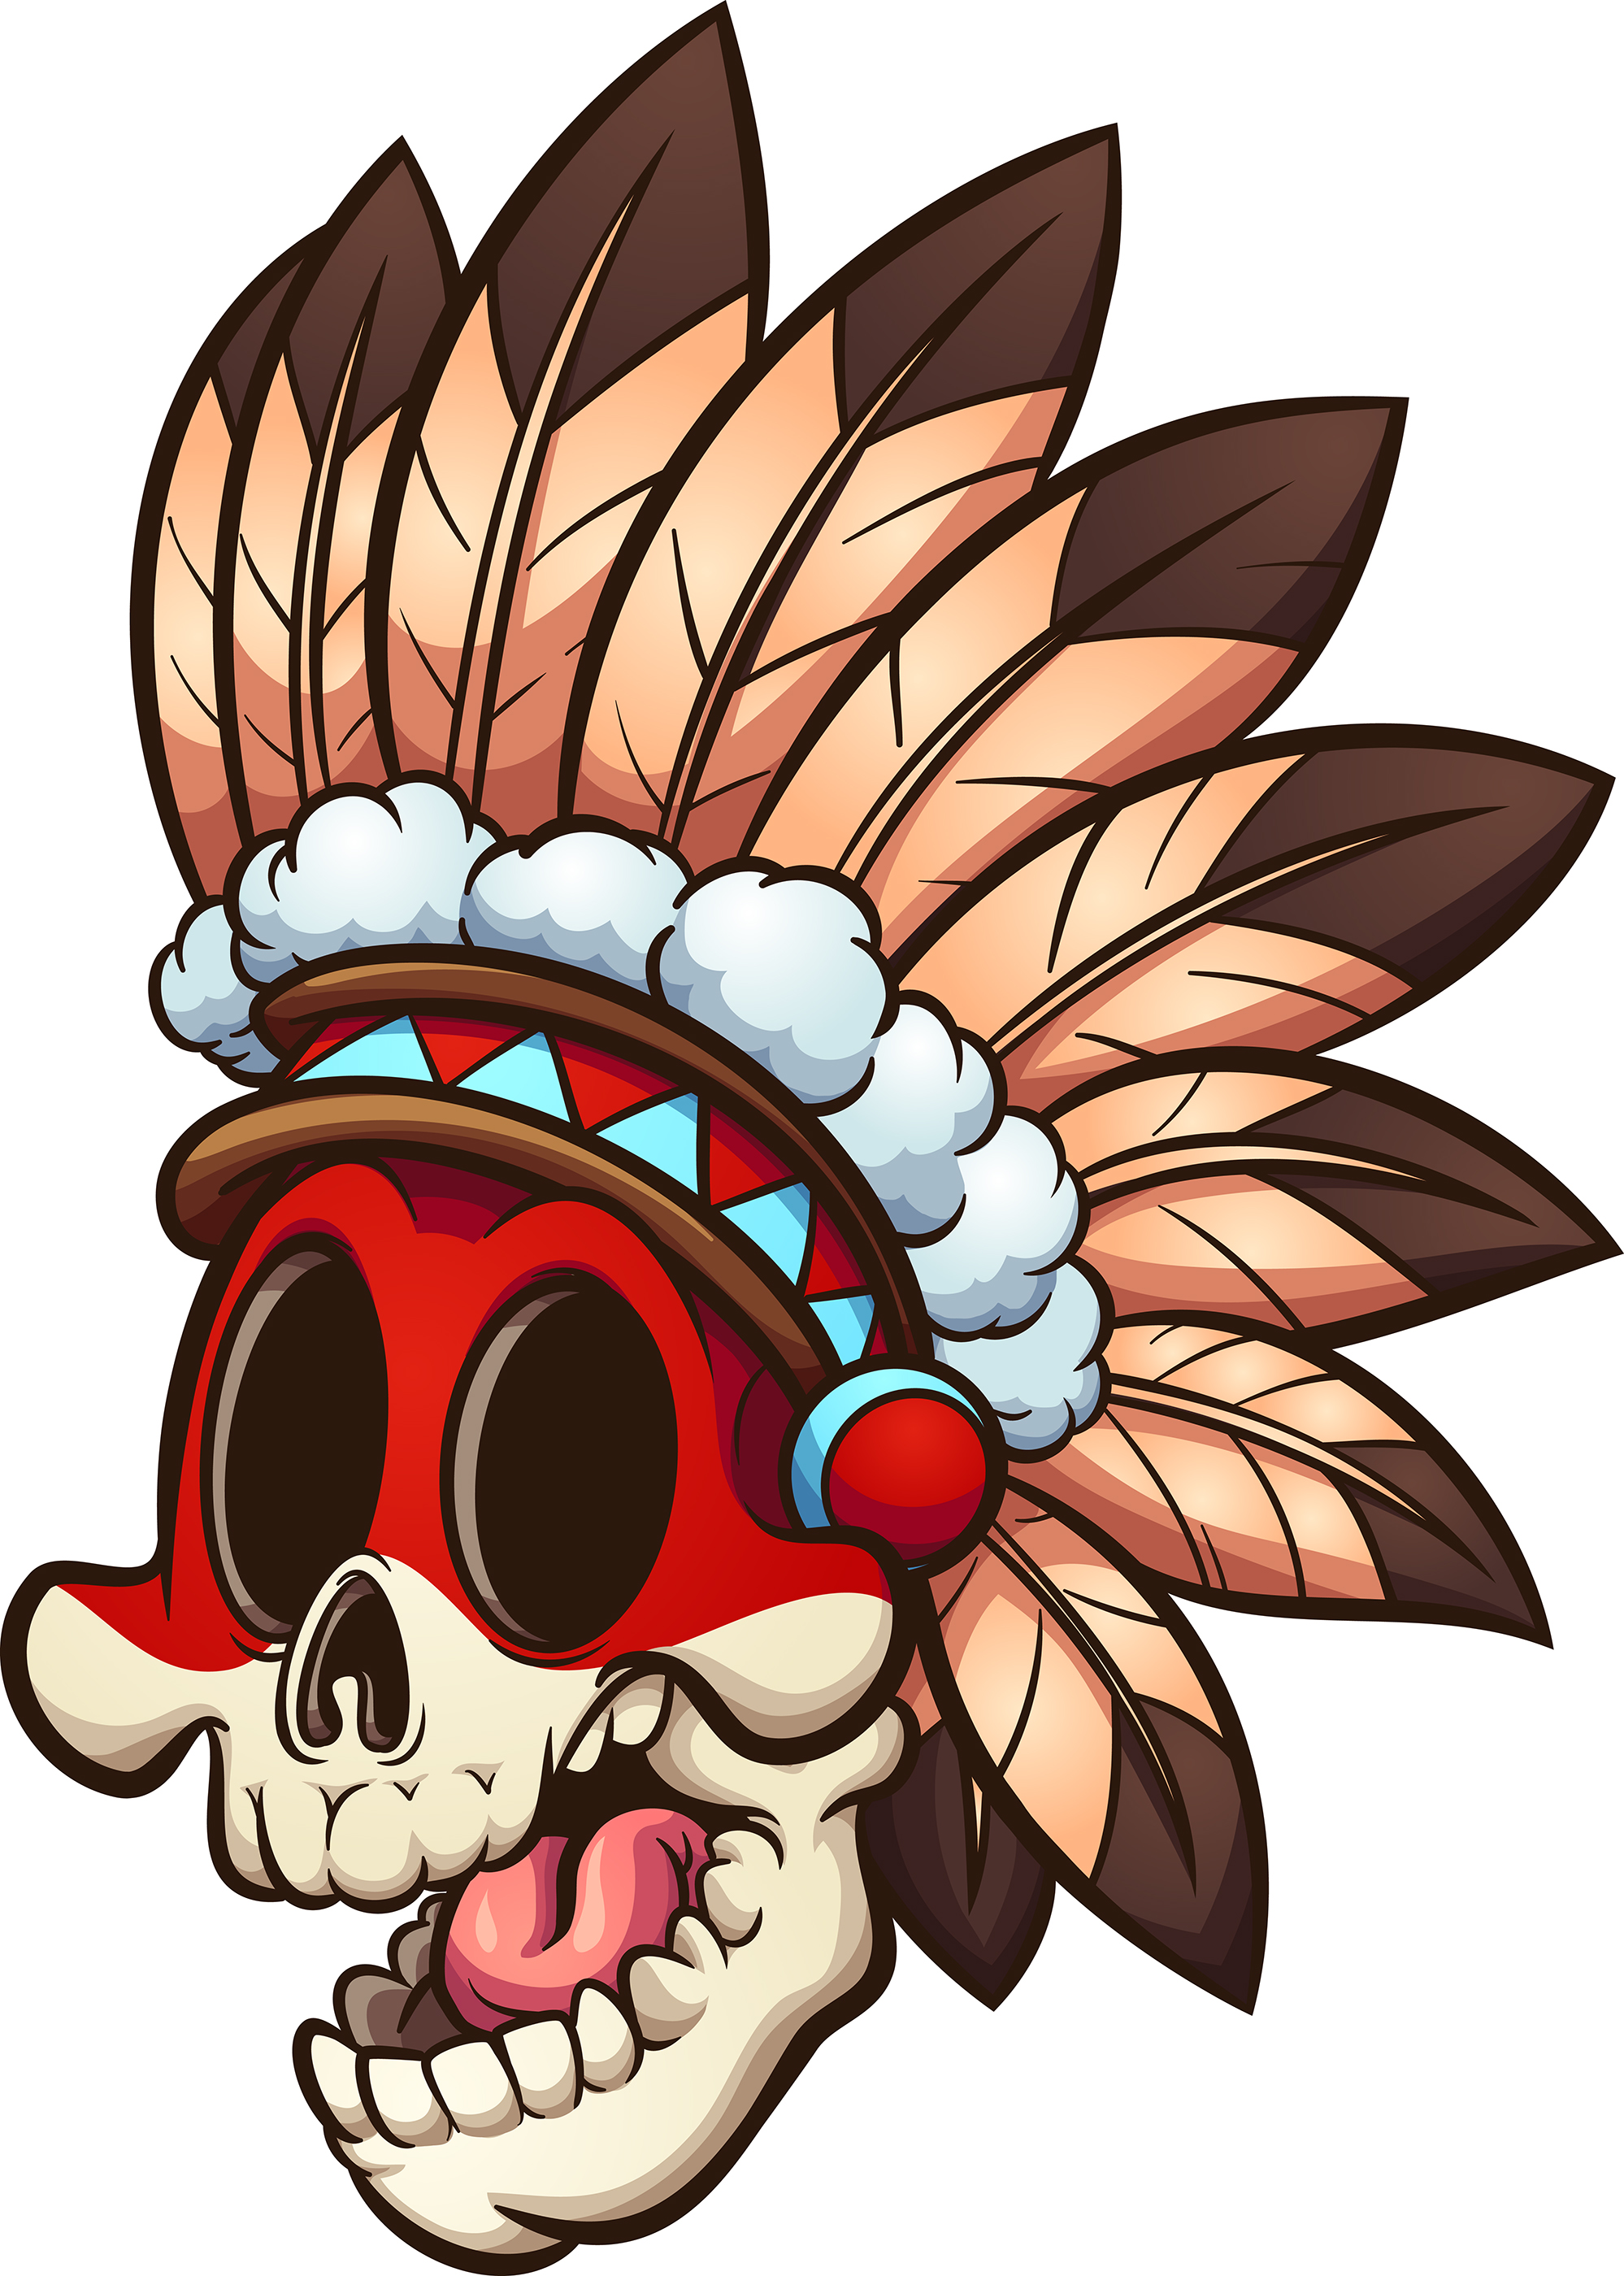 Download Native American Skull 600973 - Download Free Vectors ...